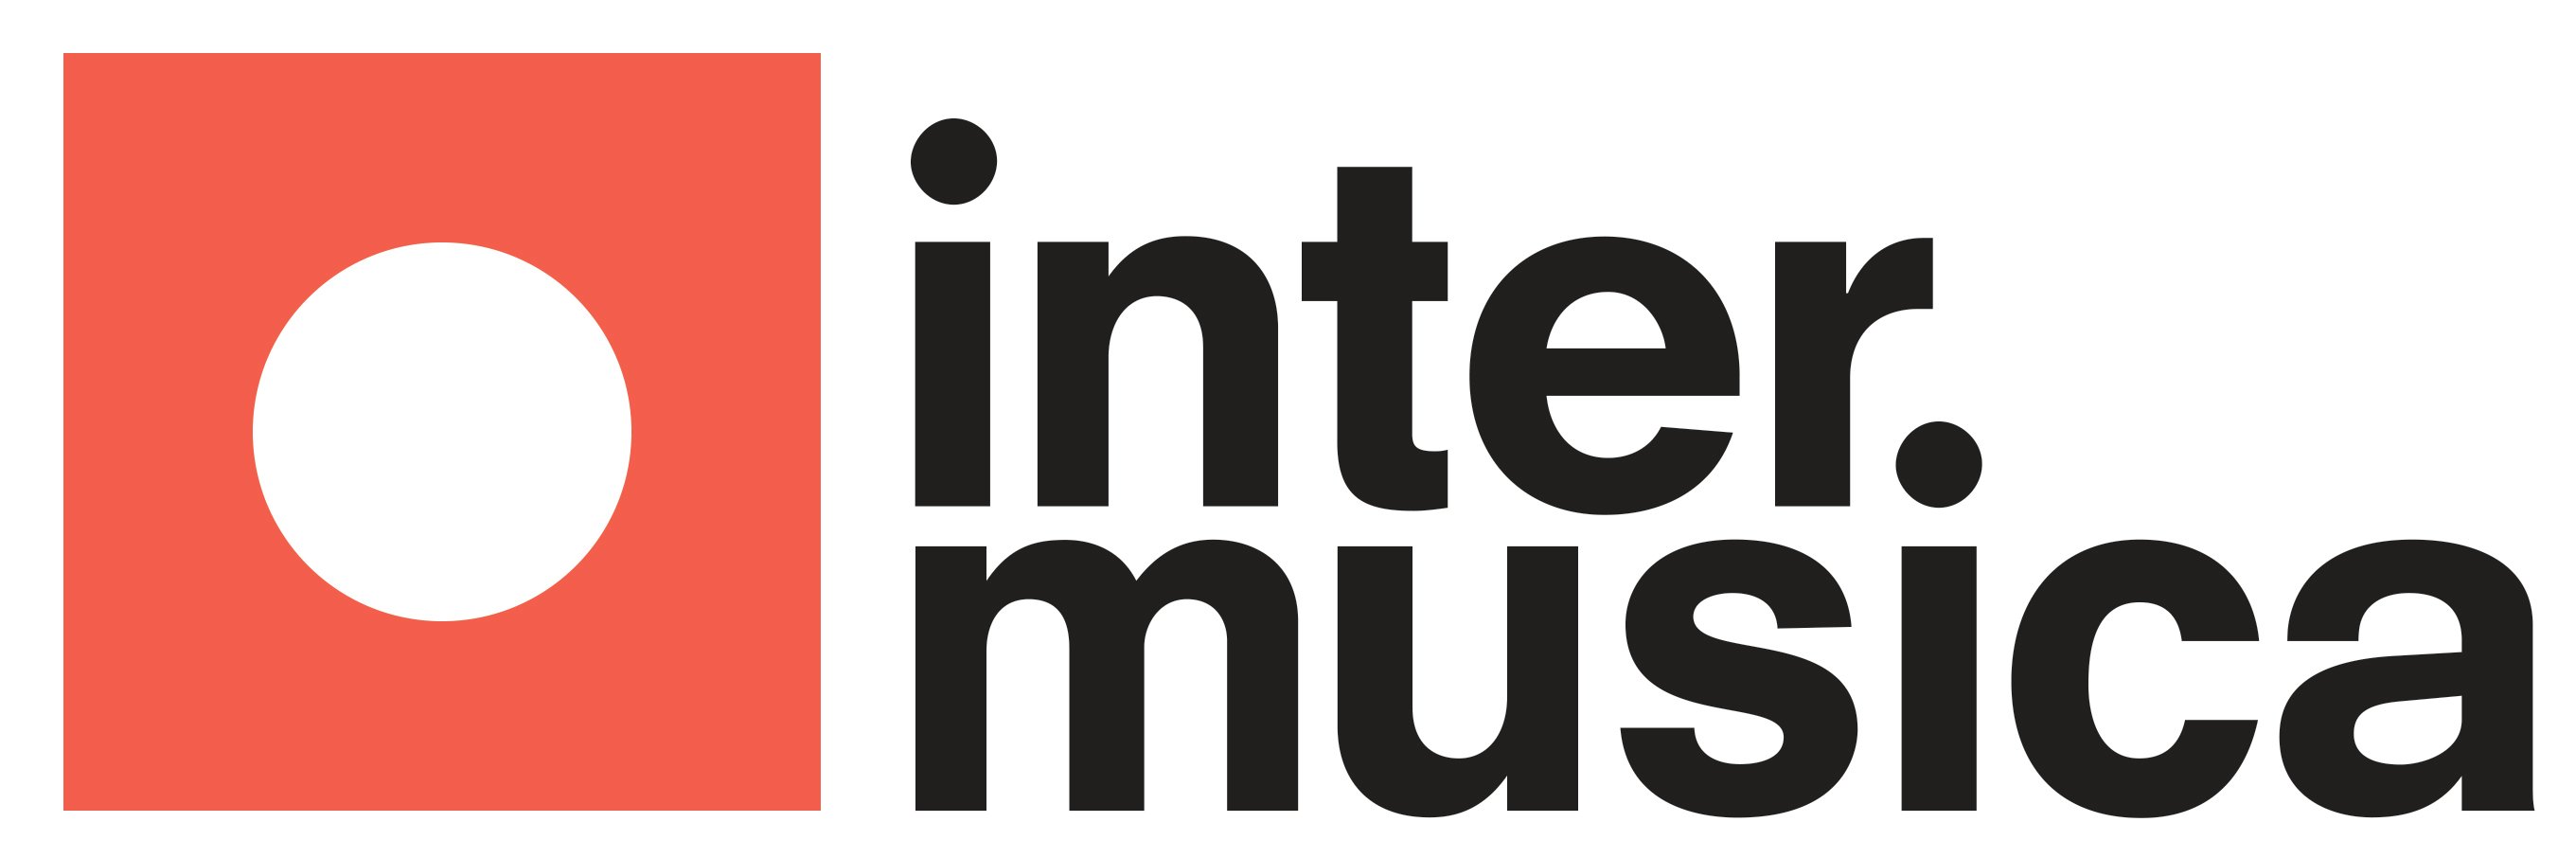 intermusica_Logo_TFS_IT_support_London_company